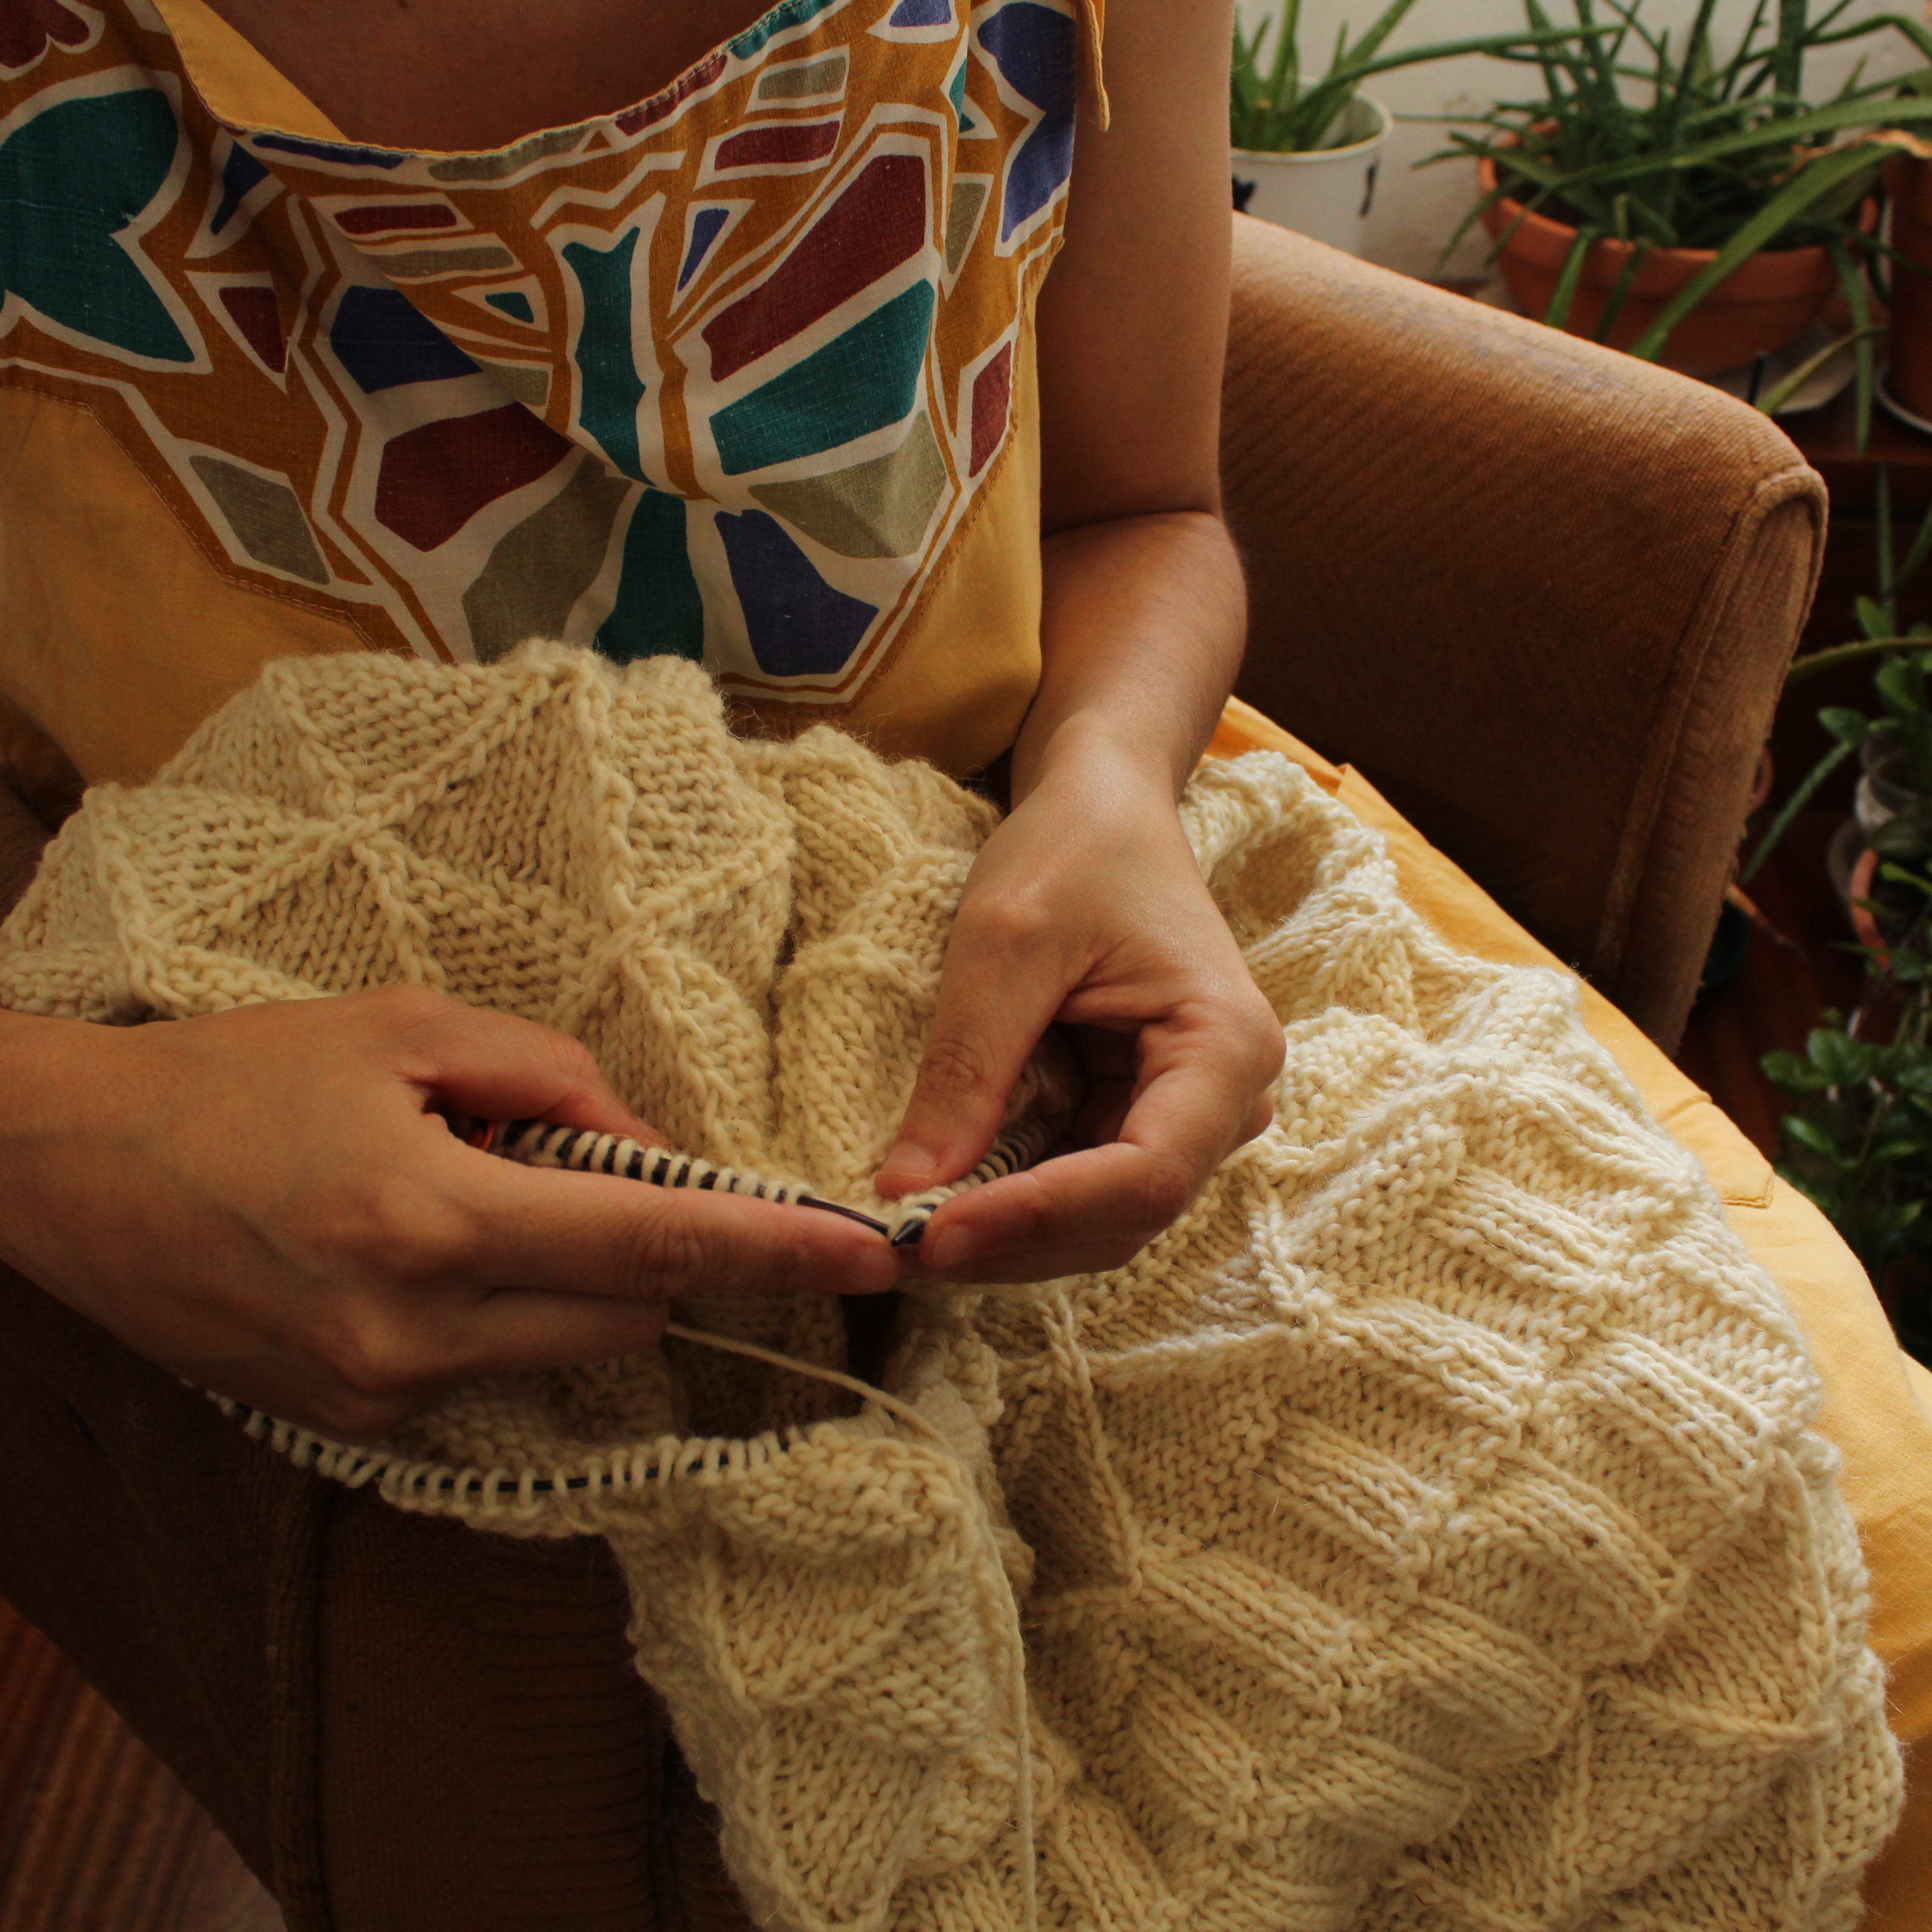 Io Morales obradoiro textil artesanal tecido a man